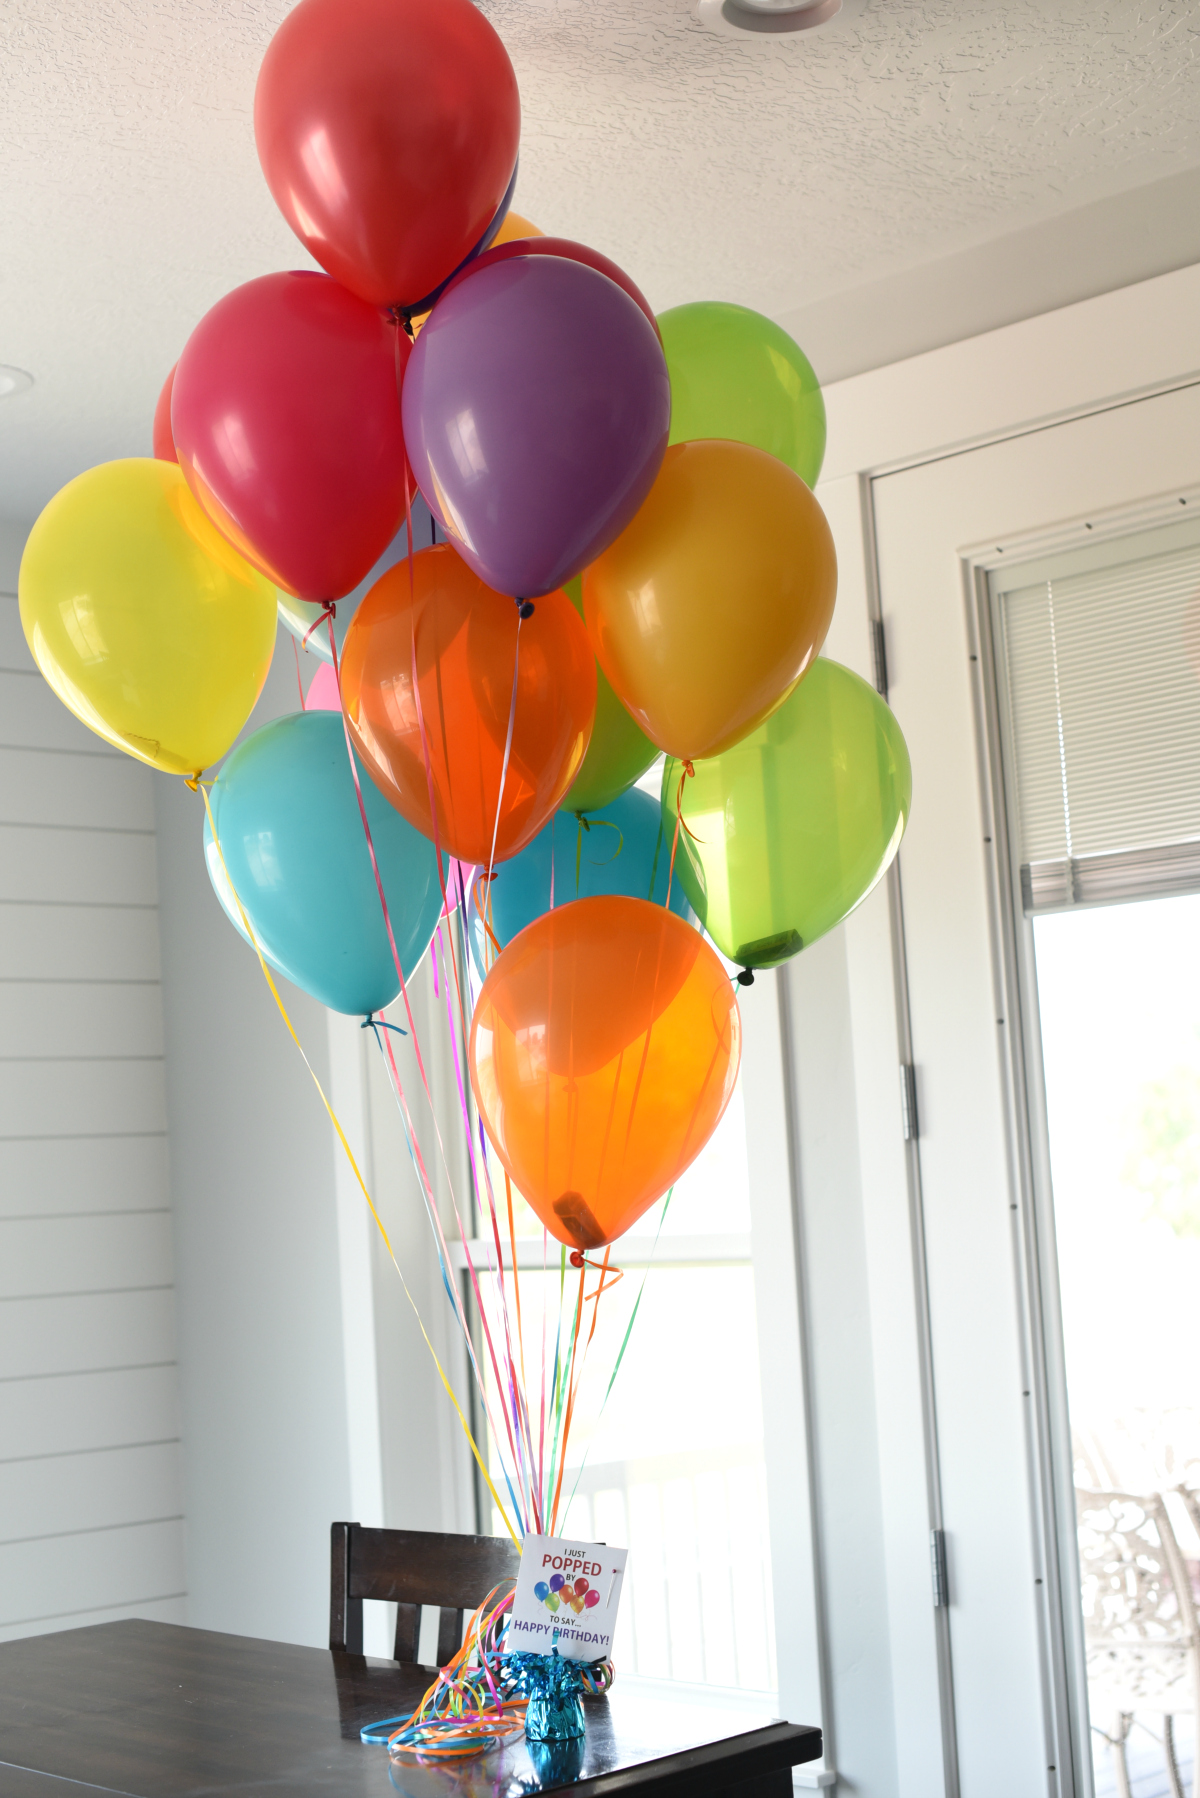 Money Gift Idea With Balloons: